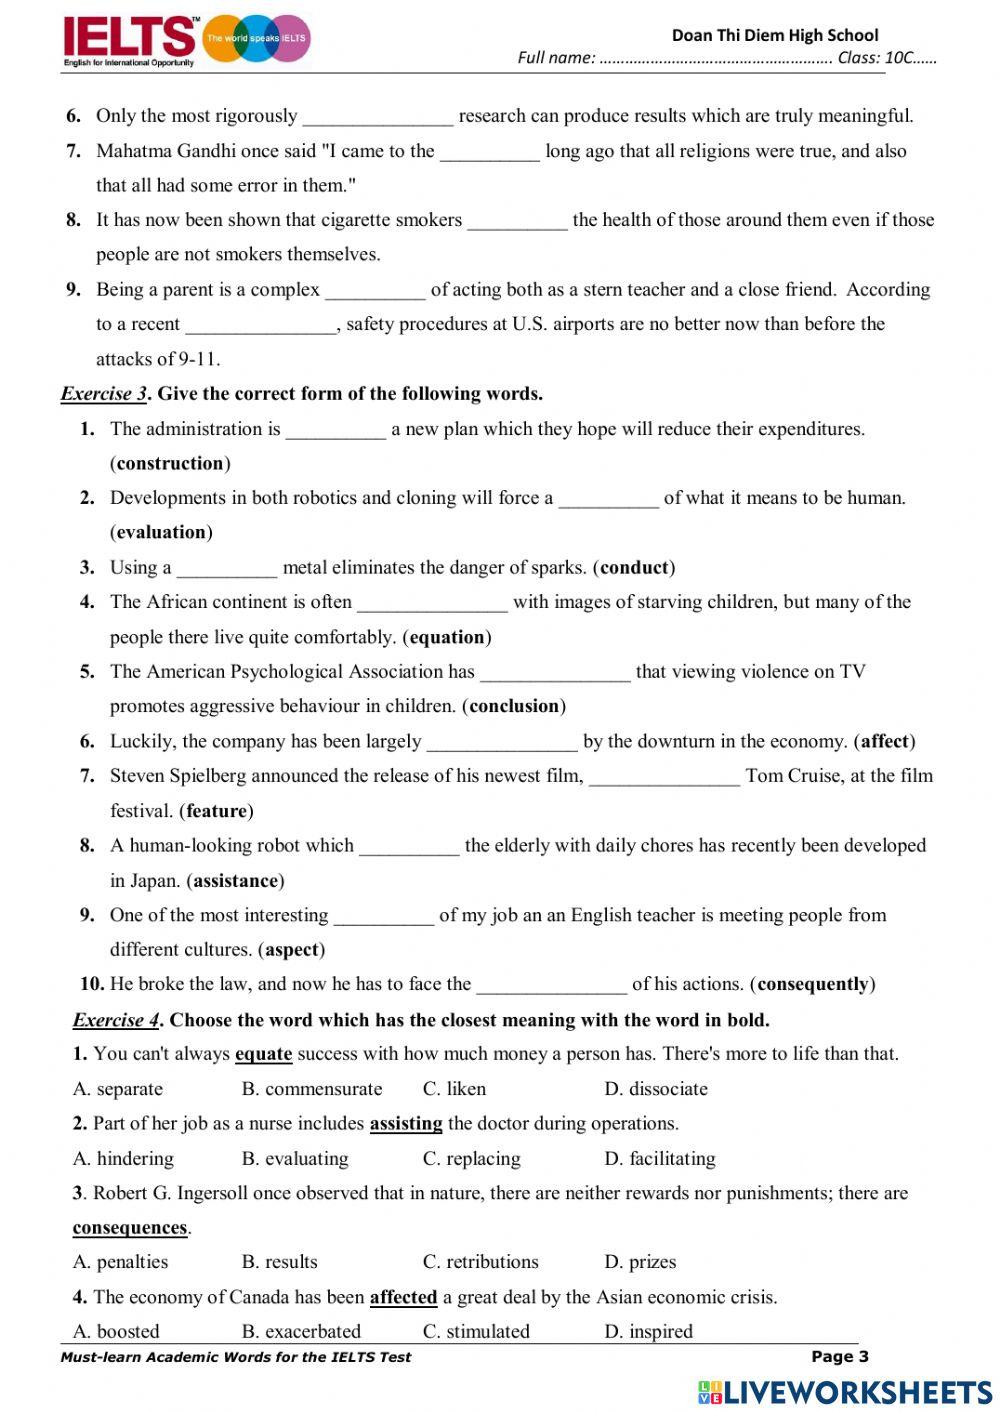 Academic word list 2.1